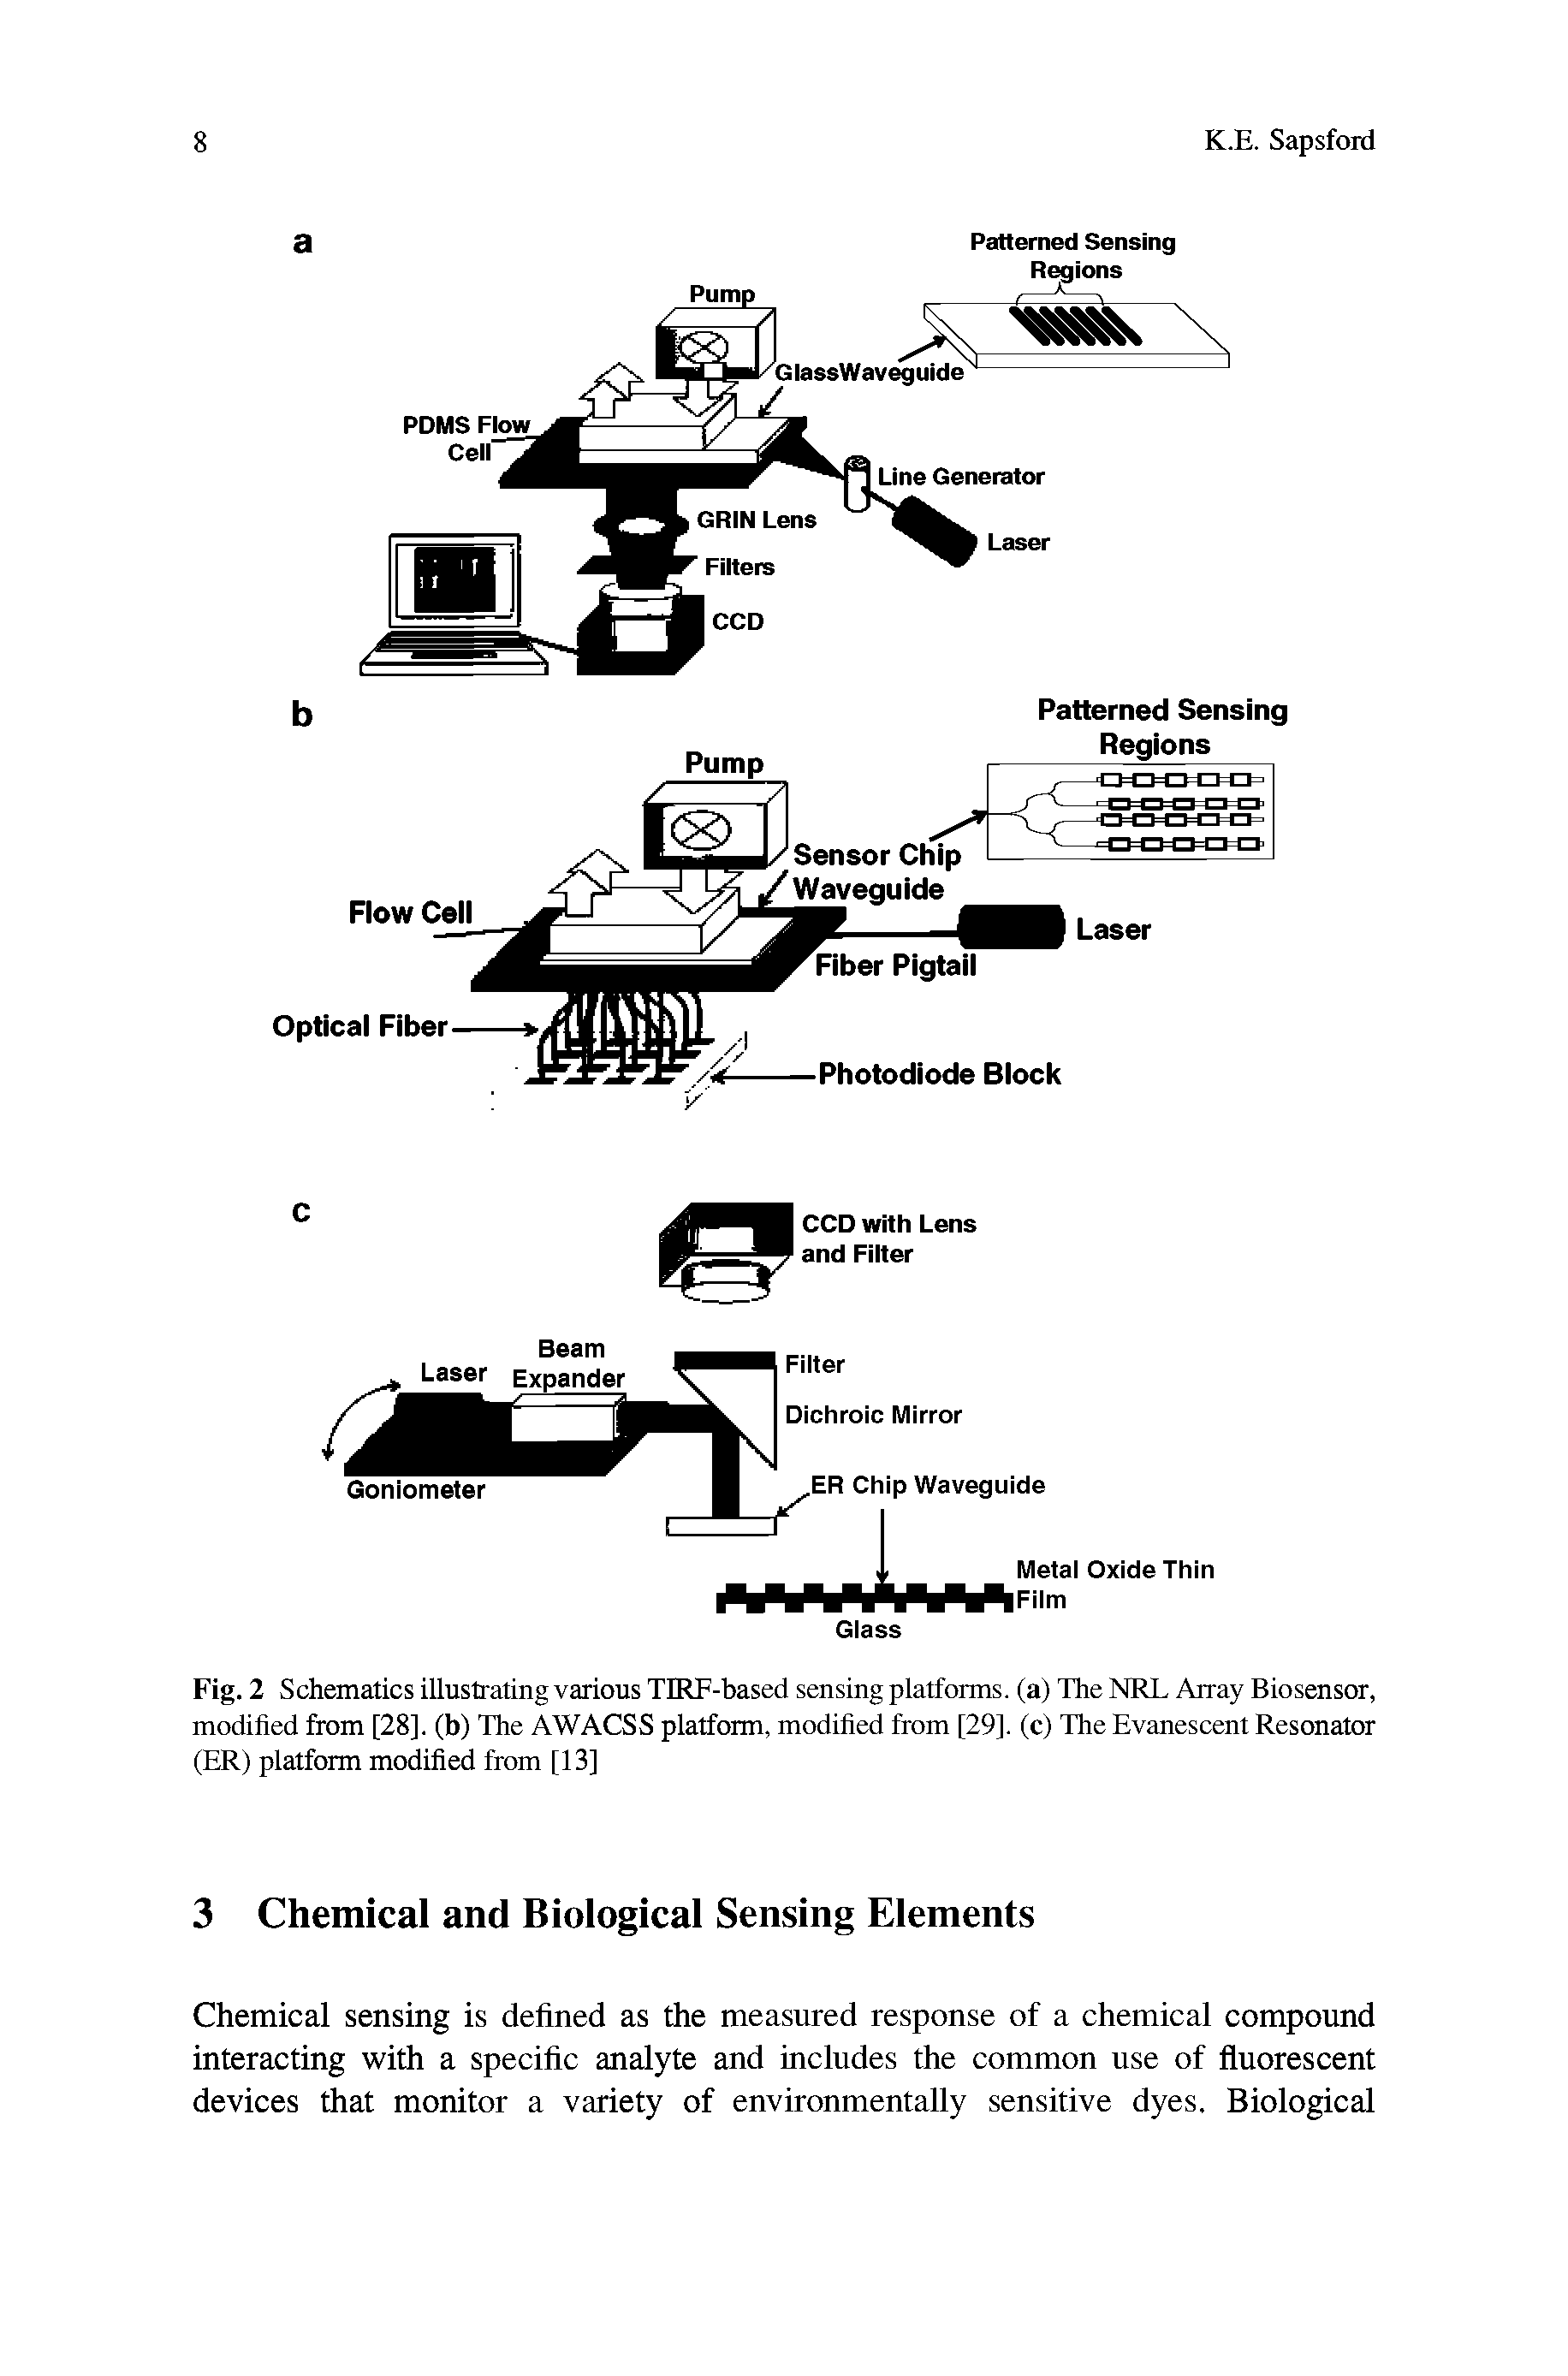 Fig. 2 Schematics illustrating various TIRF-based sensing platforms, (a) The NRL Array Biosensor, modified from [28]. (b) The AWACSS platform, modified from [29]. (c) The Evanescent Resonator (ER) platform modified from [13]...